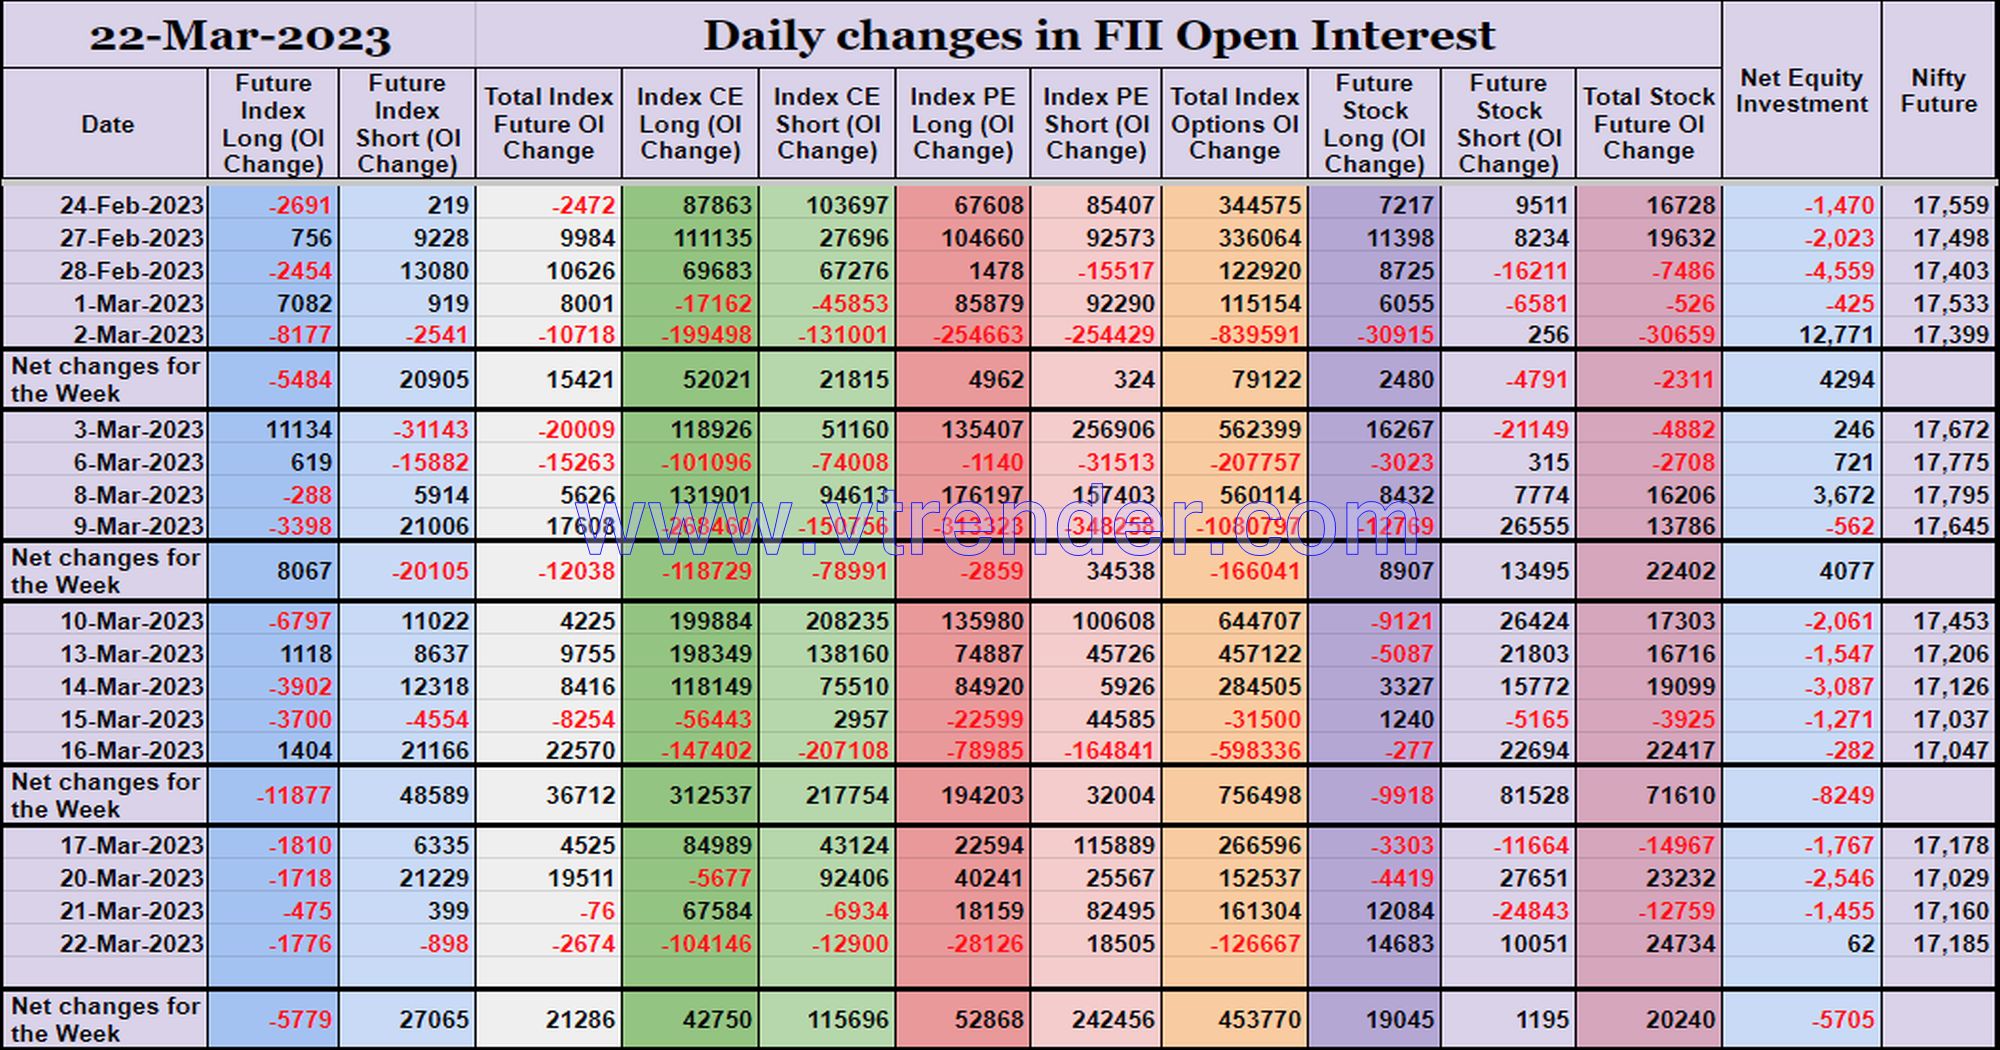 Fiioi22Mar Participantwise Open Interest (Mid-Week Changes) – 22Nd Mar 2023 Client, Dii, Fii, Open Interest, Participantwise Open Interest, Props